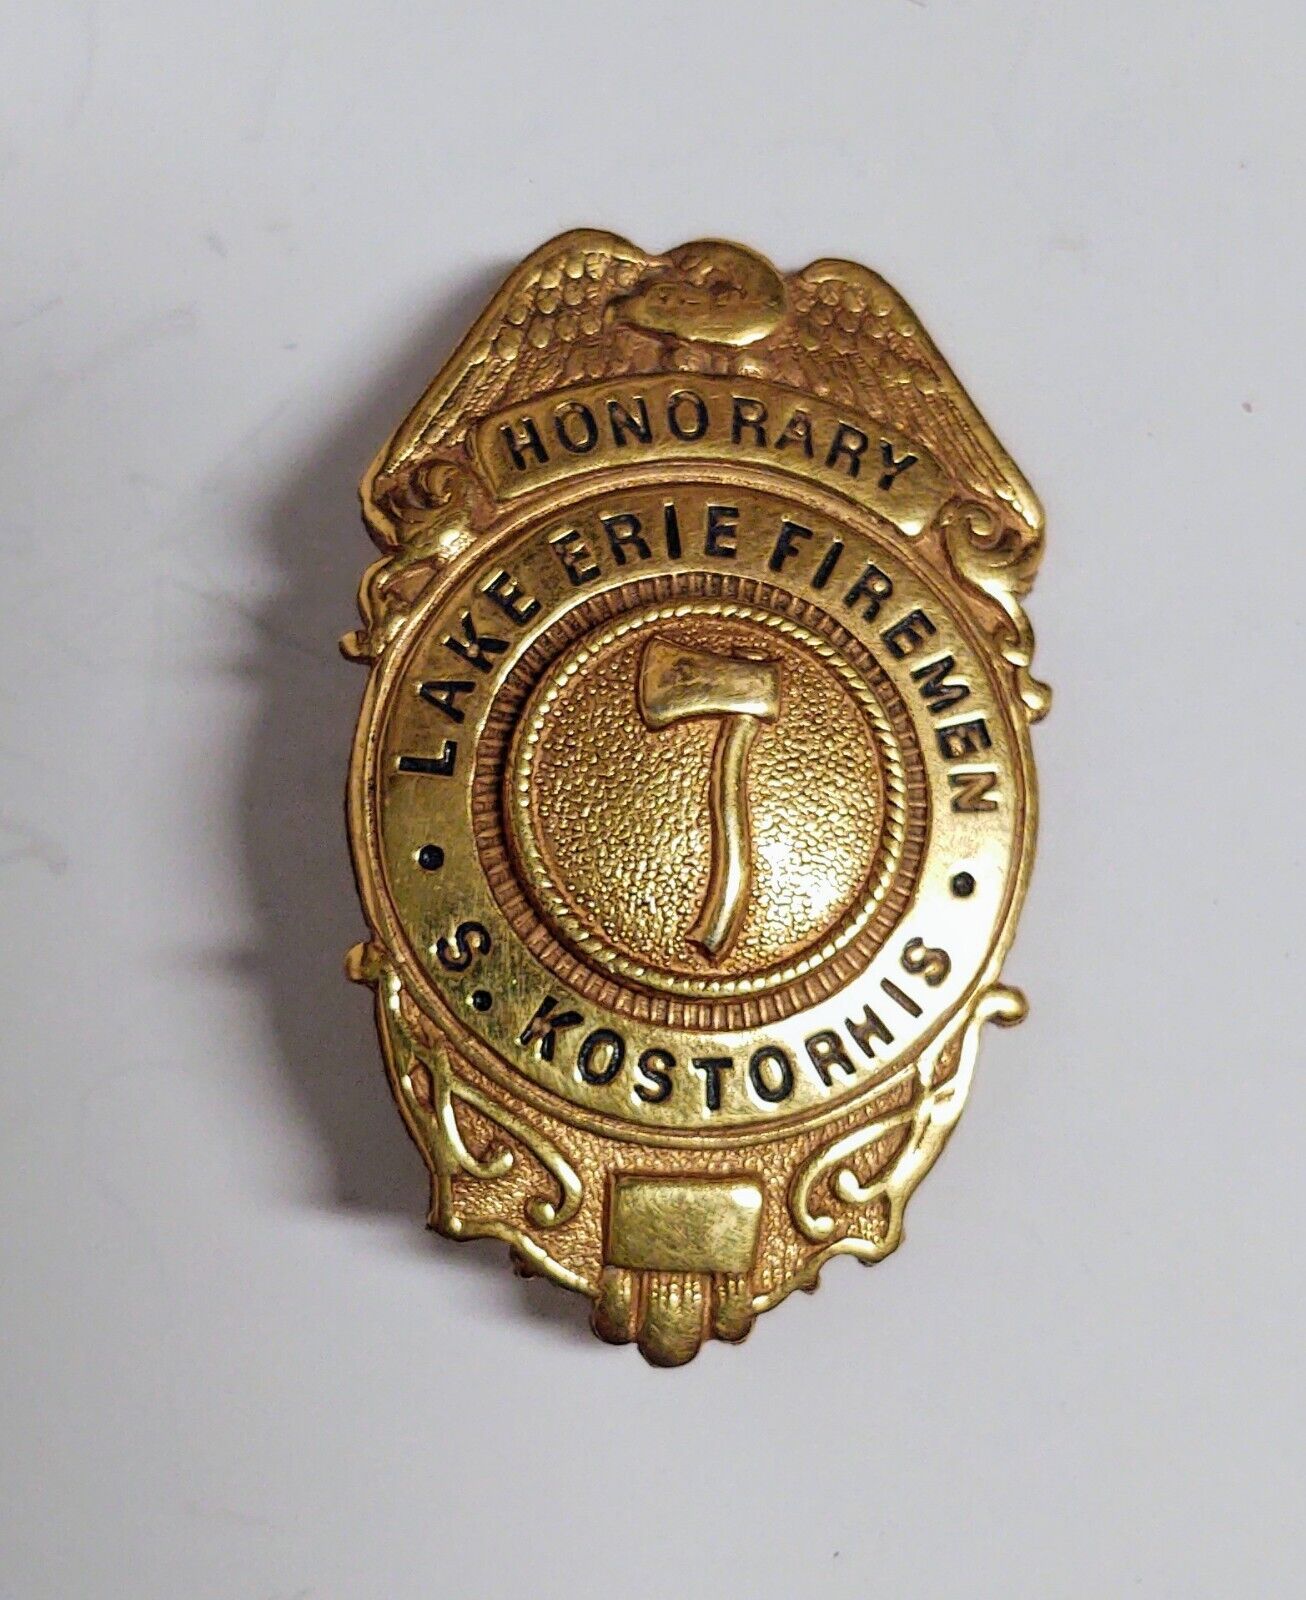 Vintage Obsolete Honorary Lake Erie Firemen Badge Pin S. Kostorhis #7